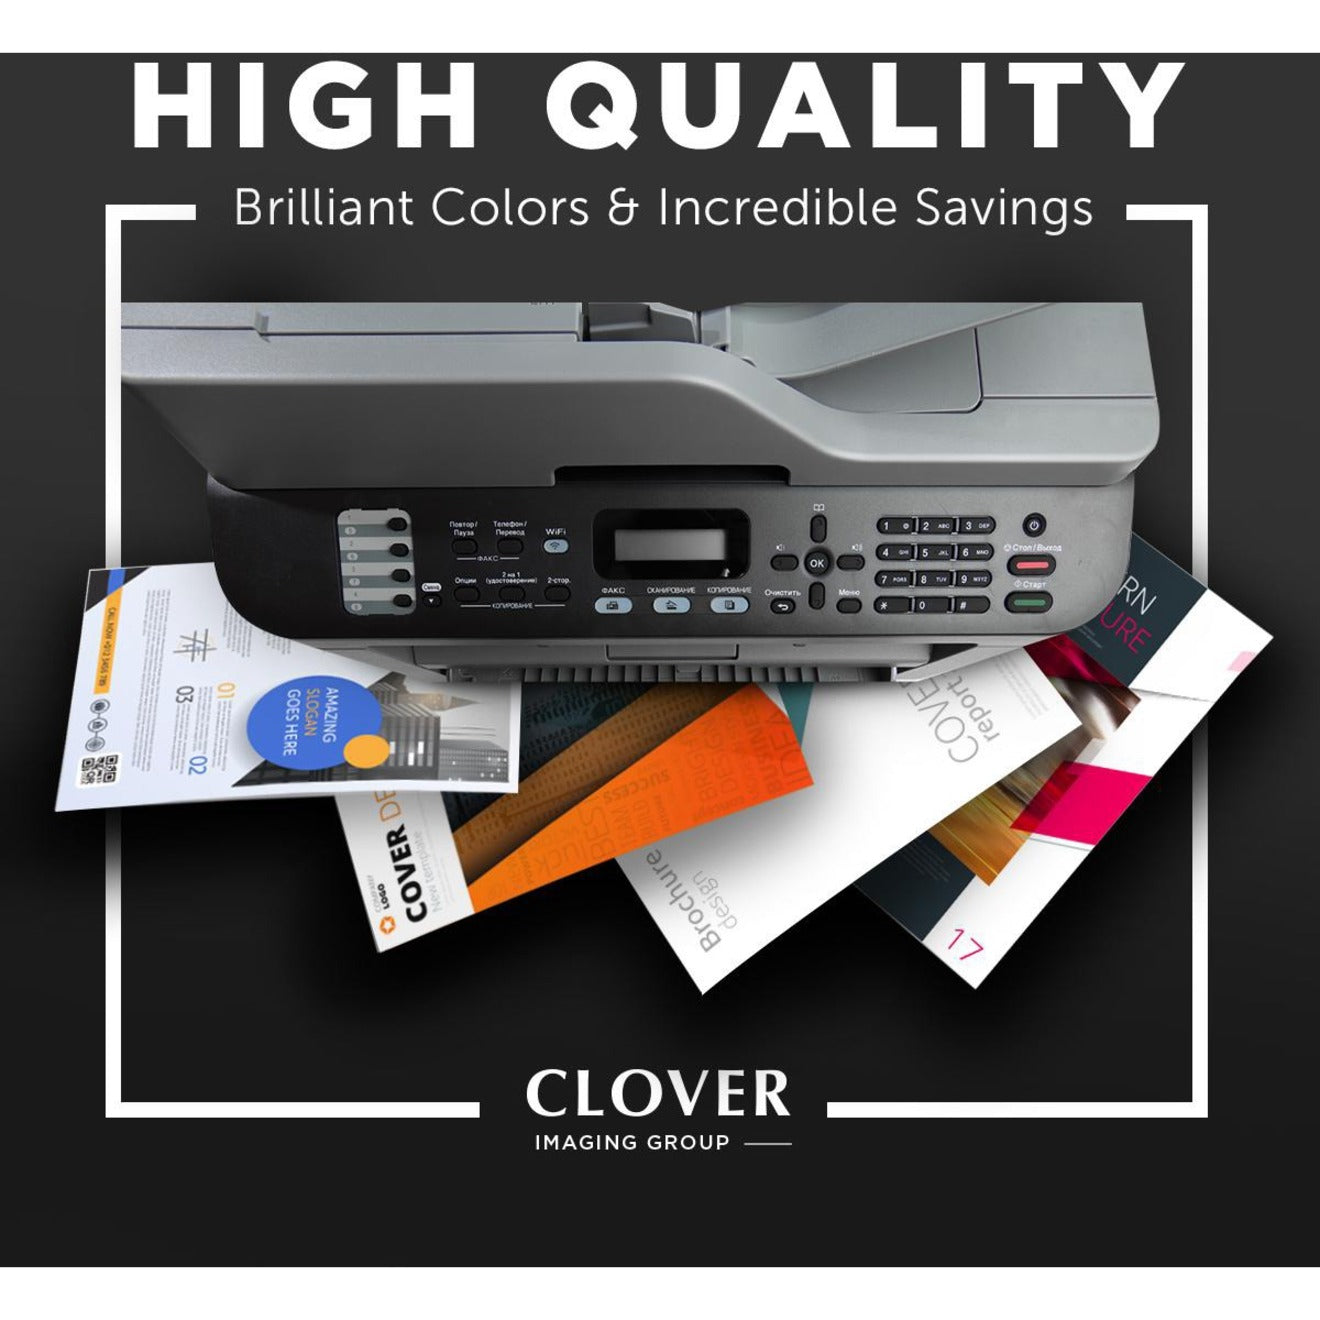 Clover Technologies Remanufactured Laser Toner Cartridge - Alternative for HP 307A (CE741A CE741-67901) - Cyan Pack